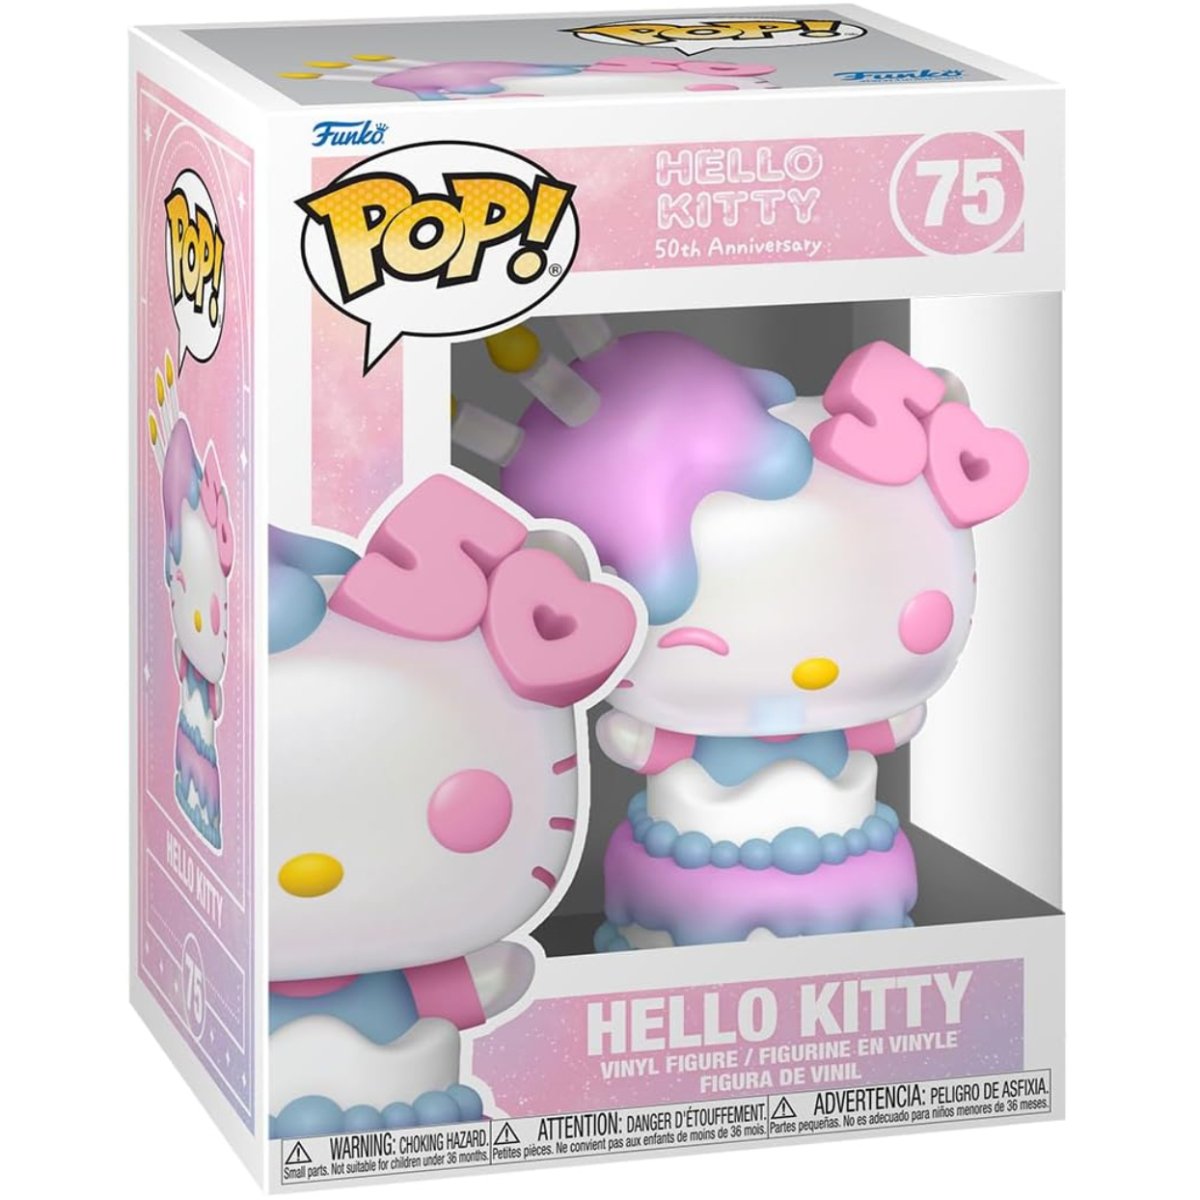 Sanrio - Hello Kitty 50th Anniversary - Hello Kitty [In Cake] #75 - Funko Pop! Vinyl Anime - Persona Toys